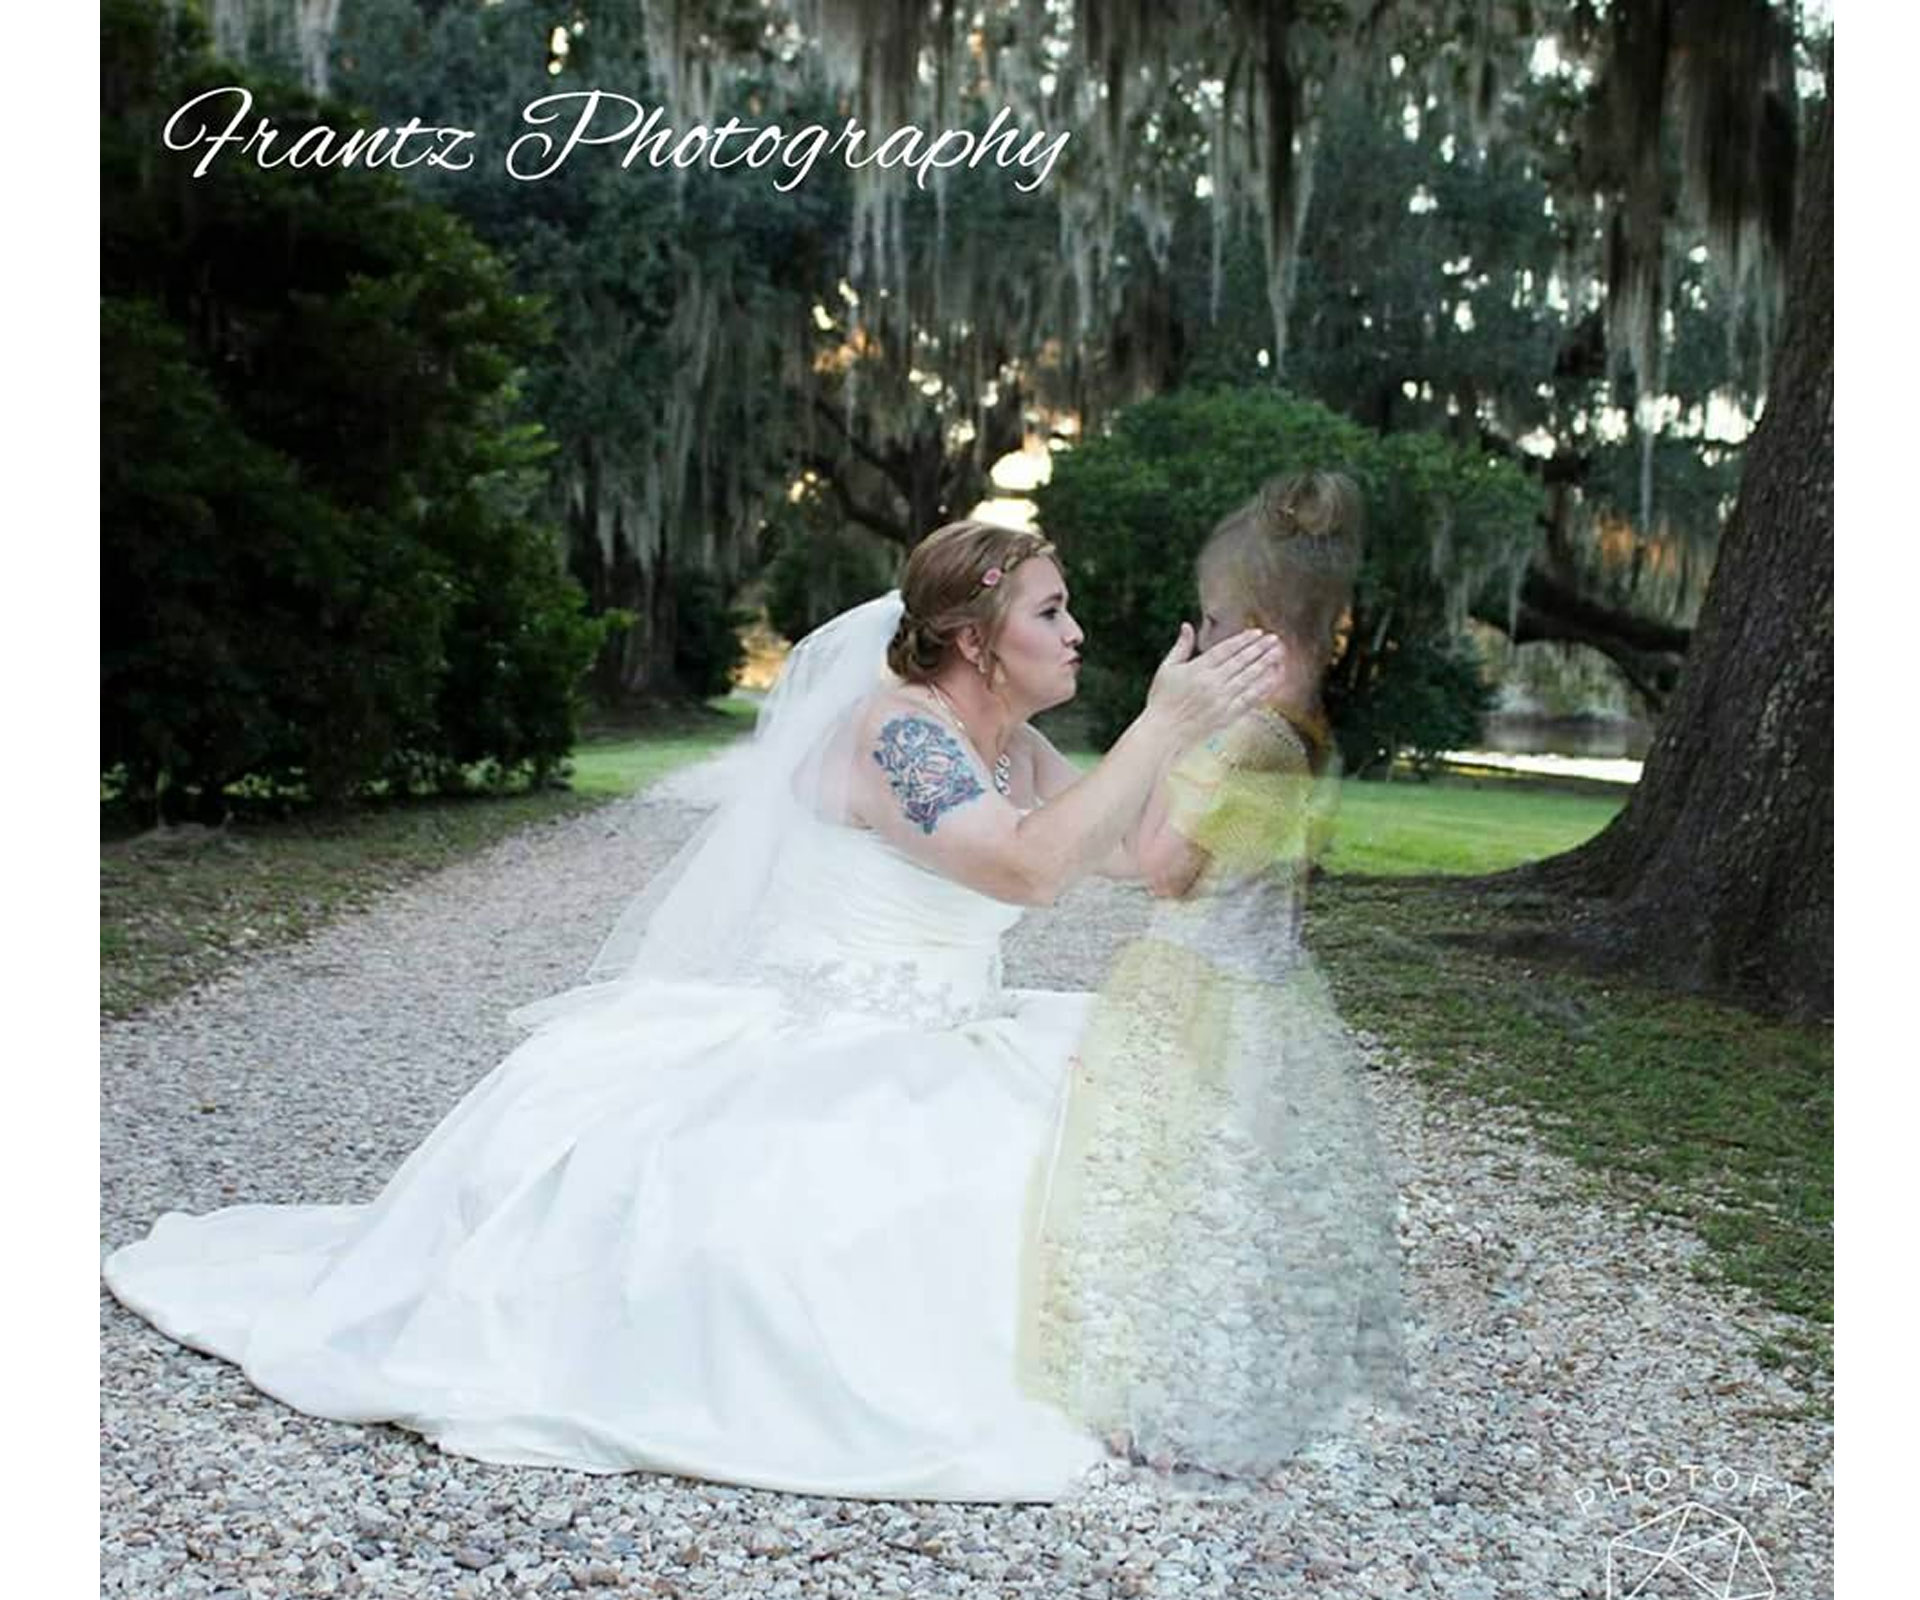 Touching wedding photo goes viral